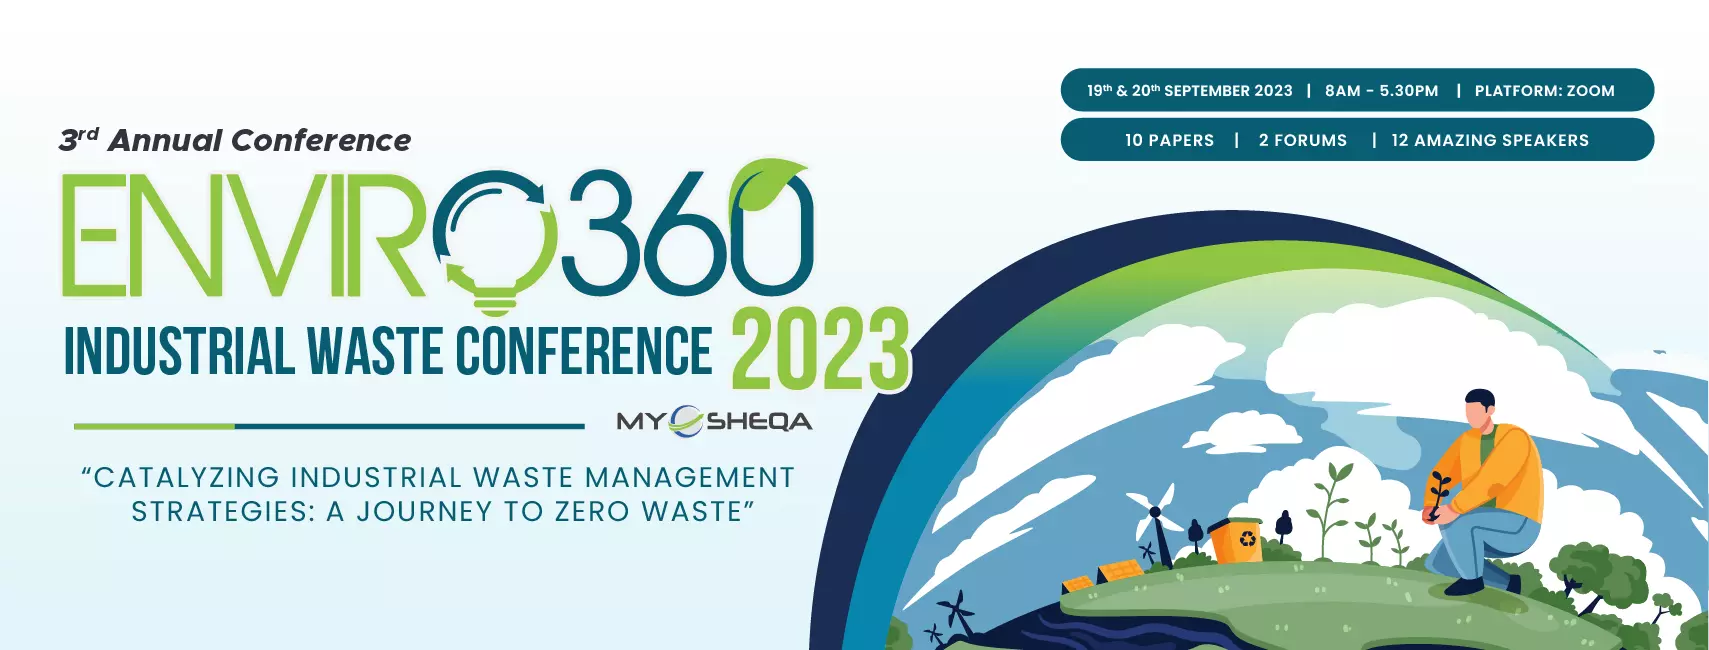 Enviro360 Industrial Waste Conference 2023